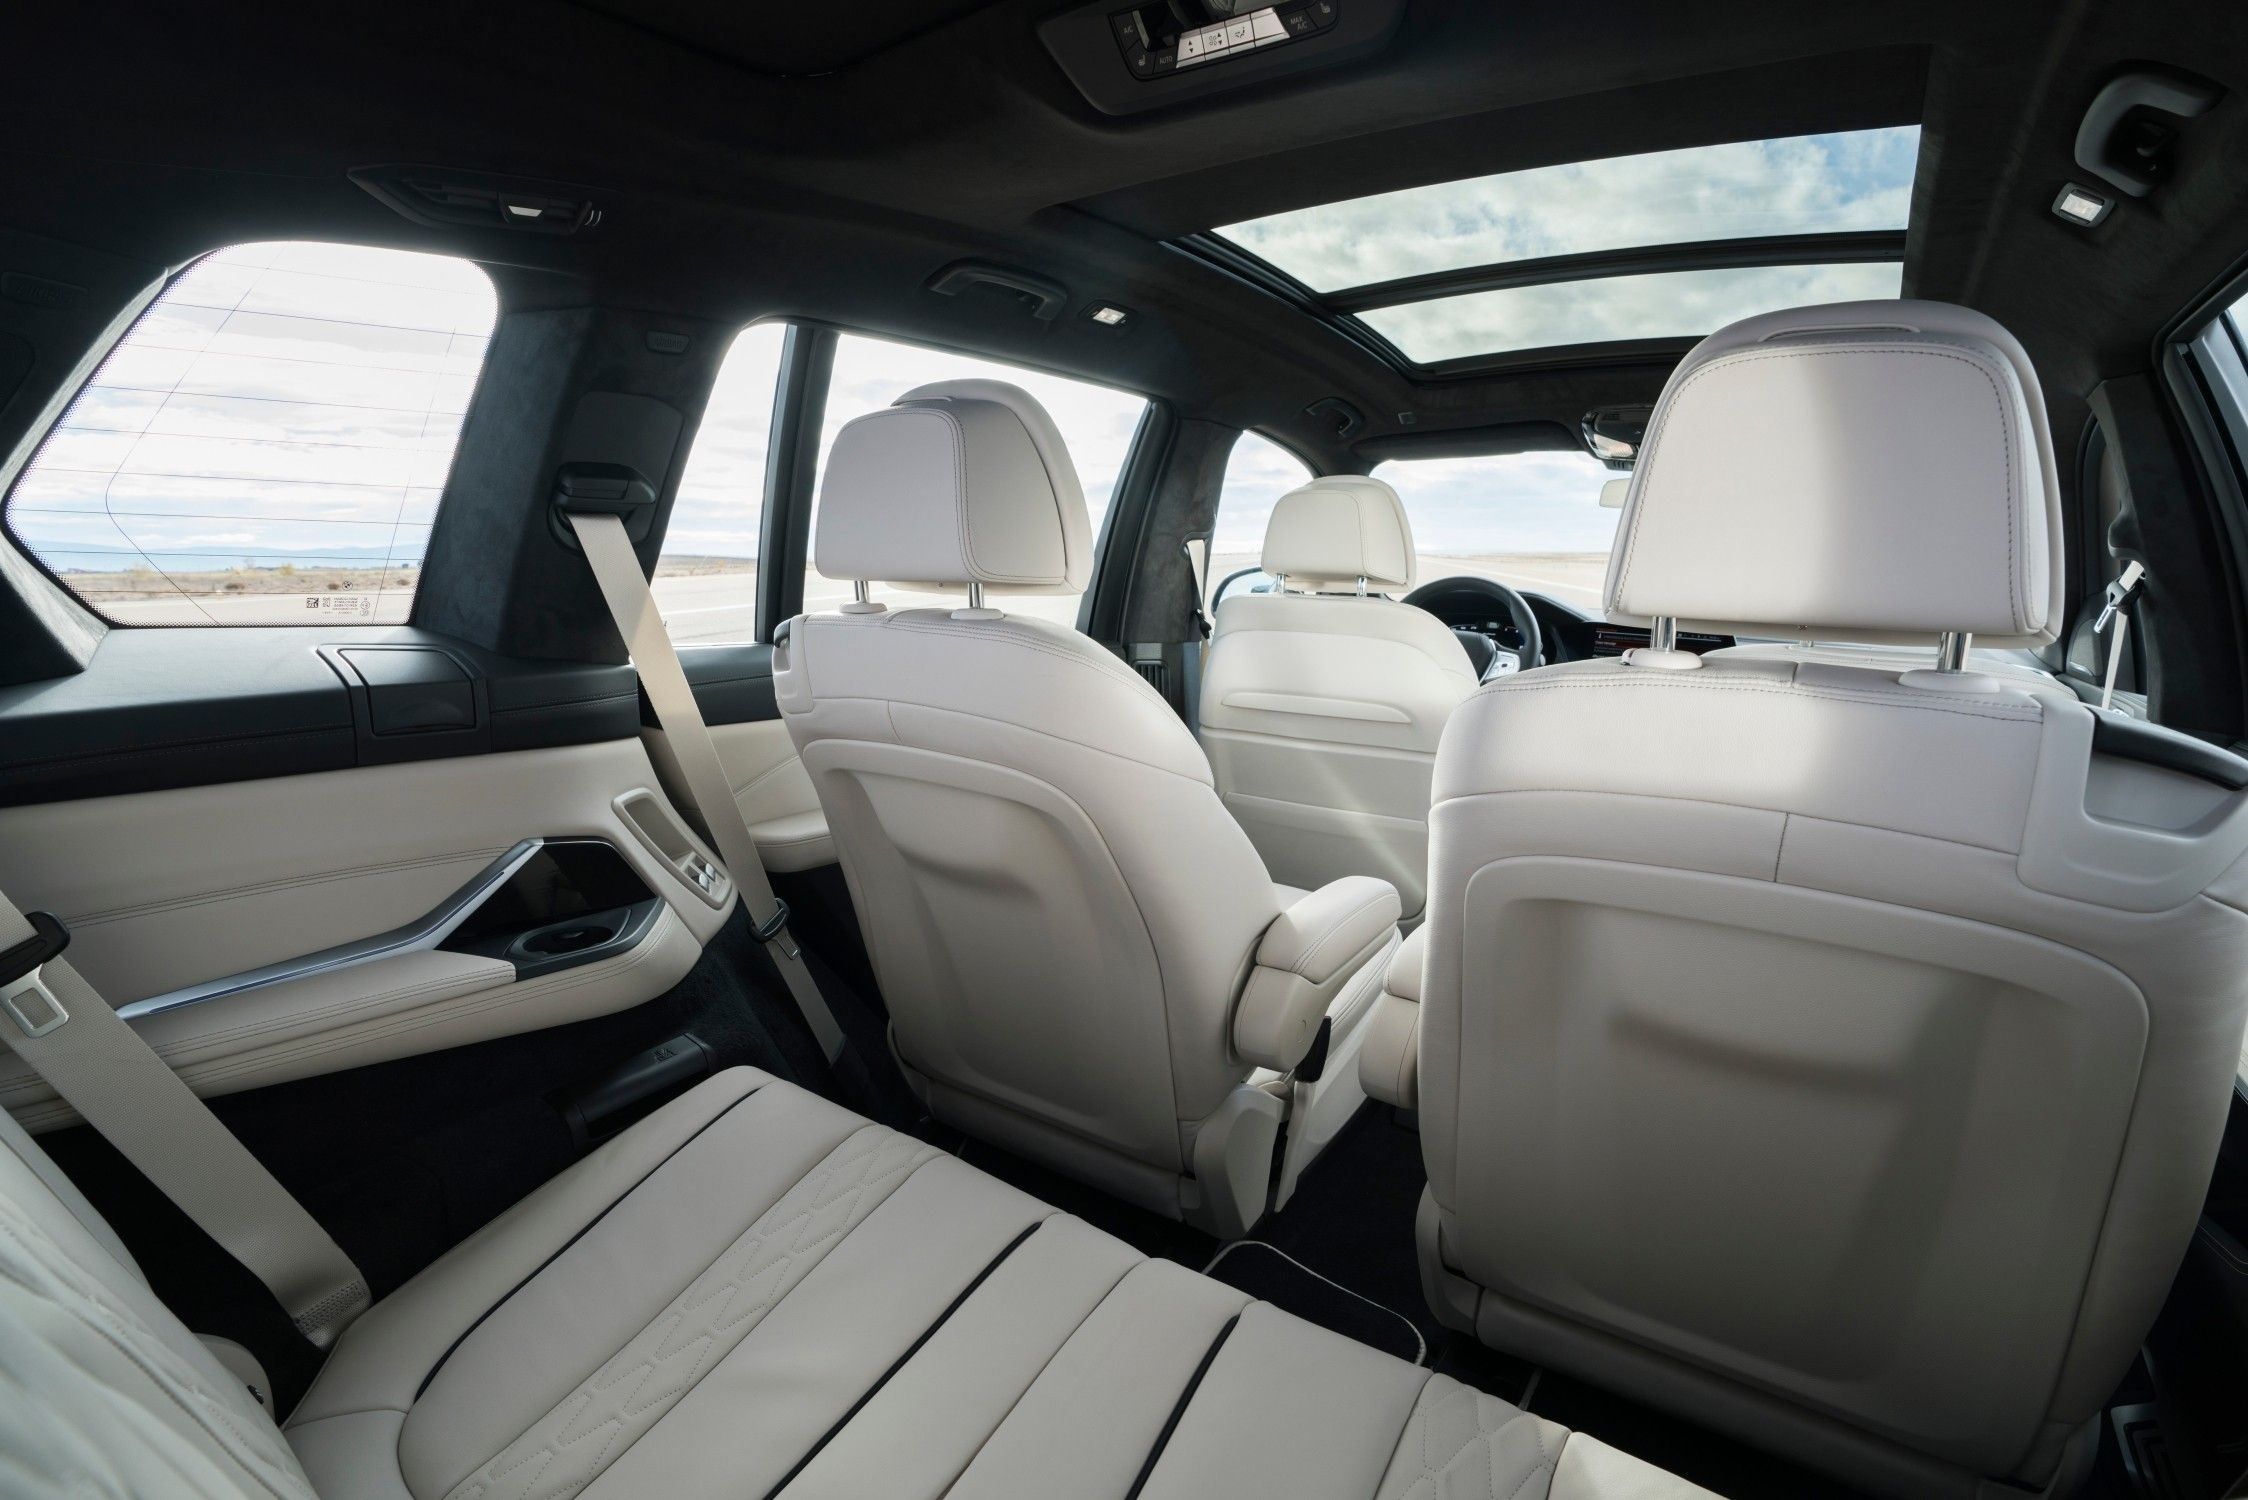 2022 BMW Alpina XB7 interior seating layout view